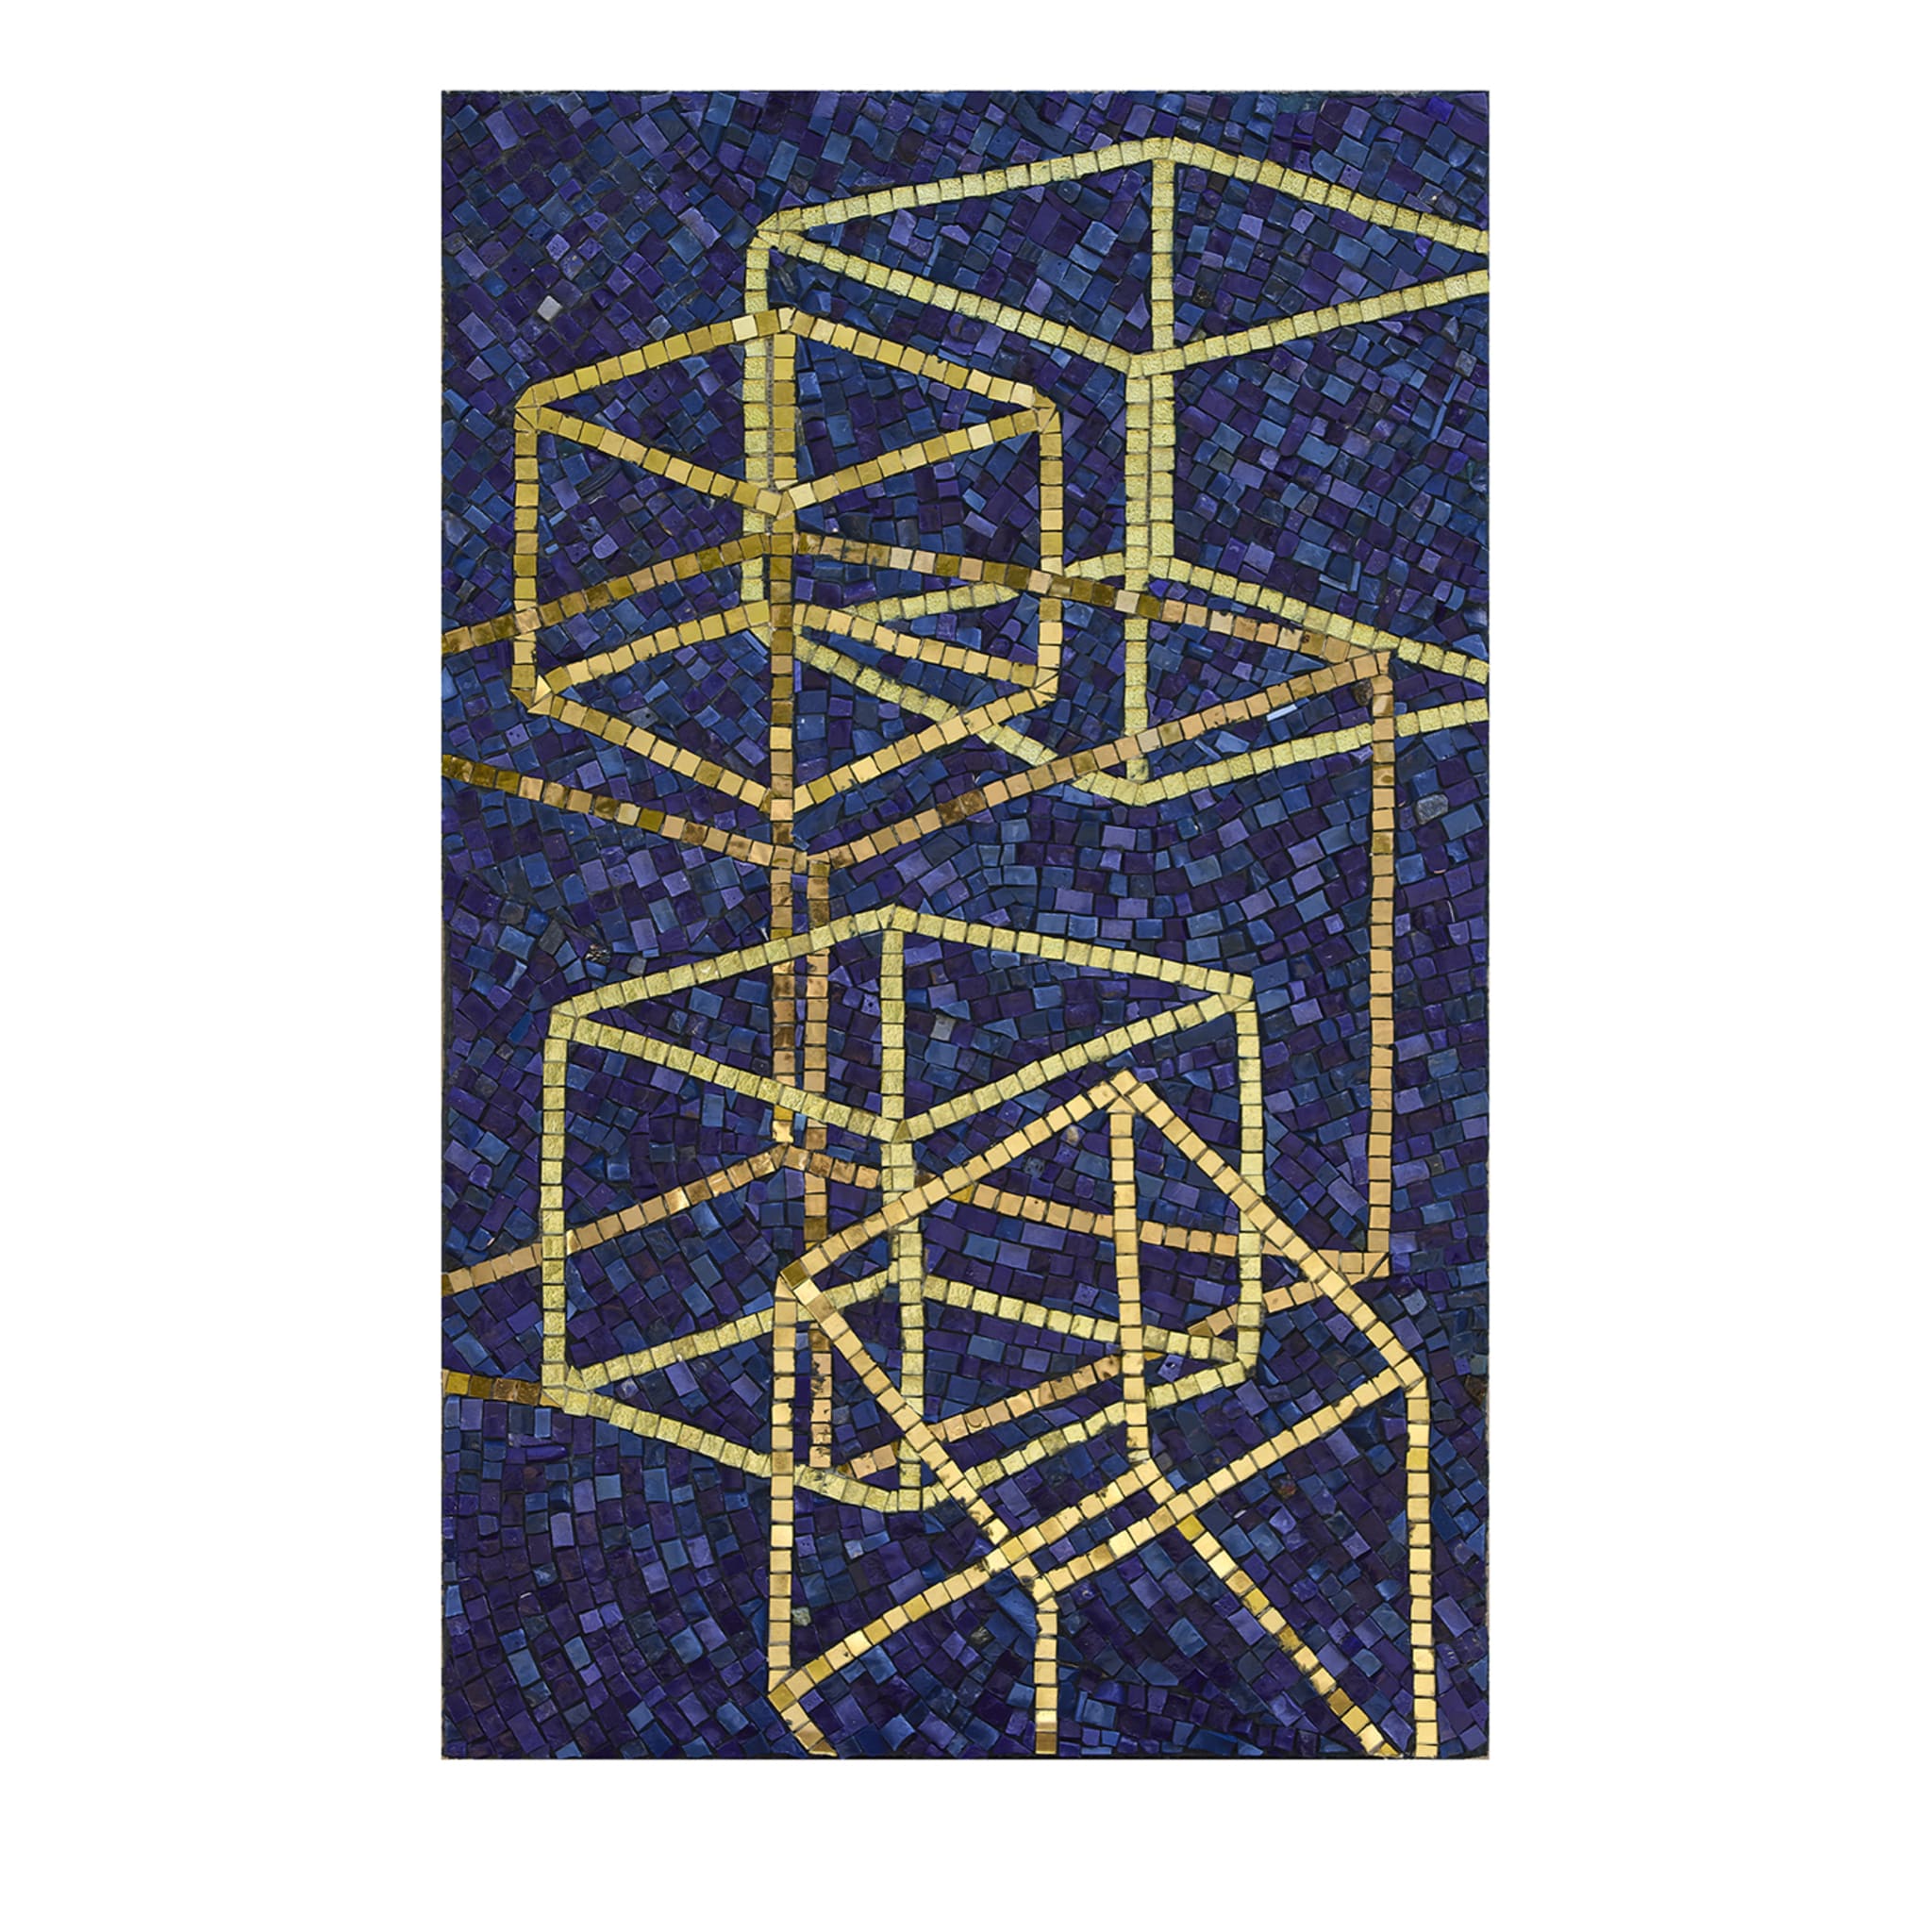 Solidi Platonici 1 Blau-goldene Mosaikplatte - Hauptansicht